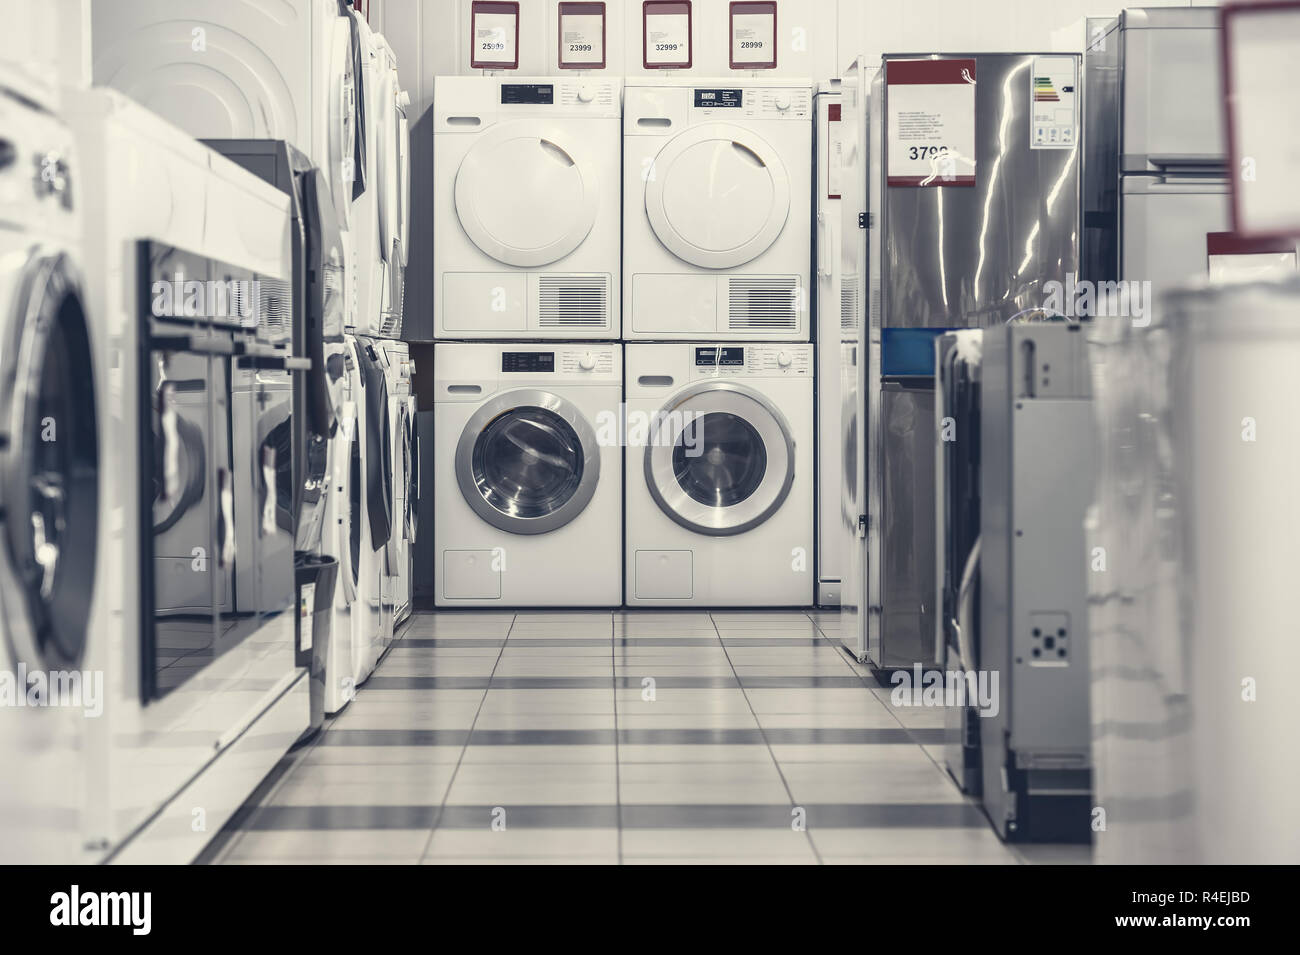 washing mashines in appliance store Stock Photo